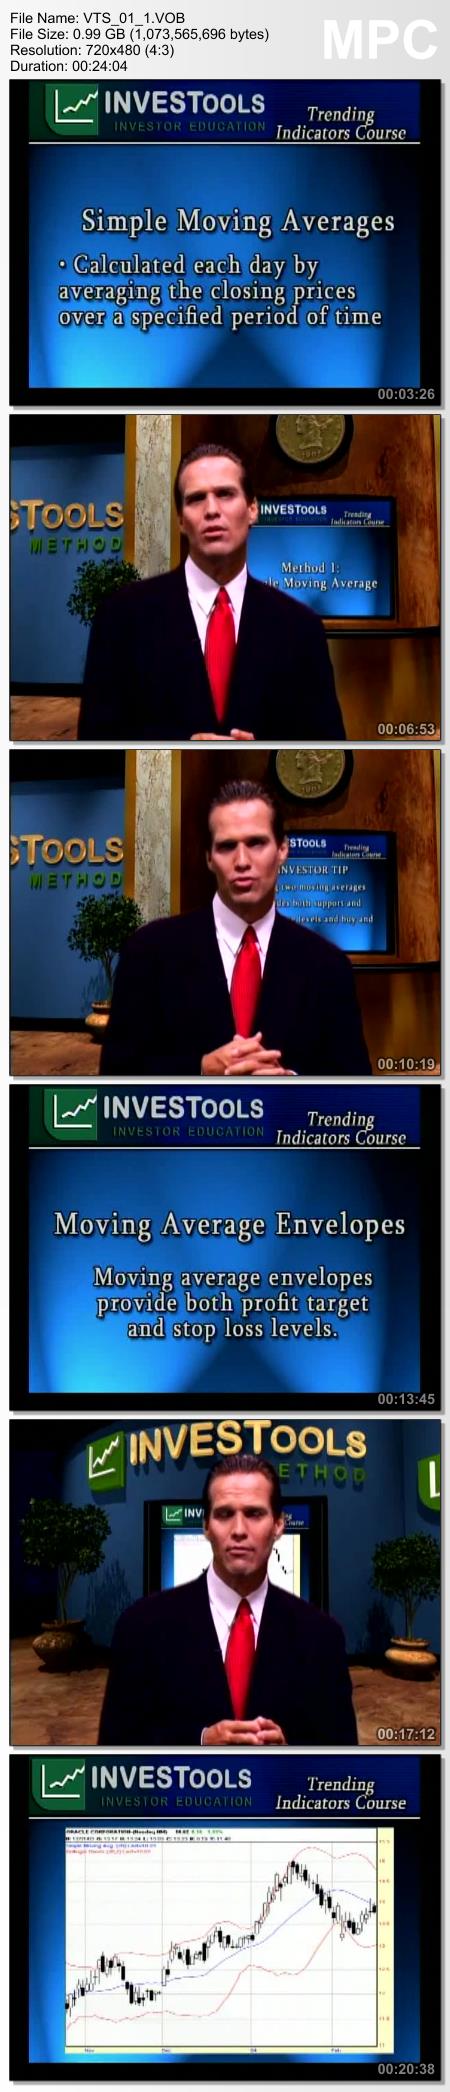 Investools Advanced Technical Analysis